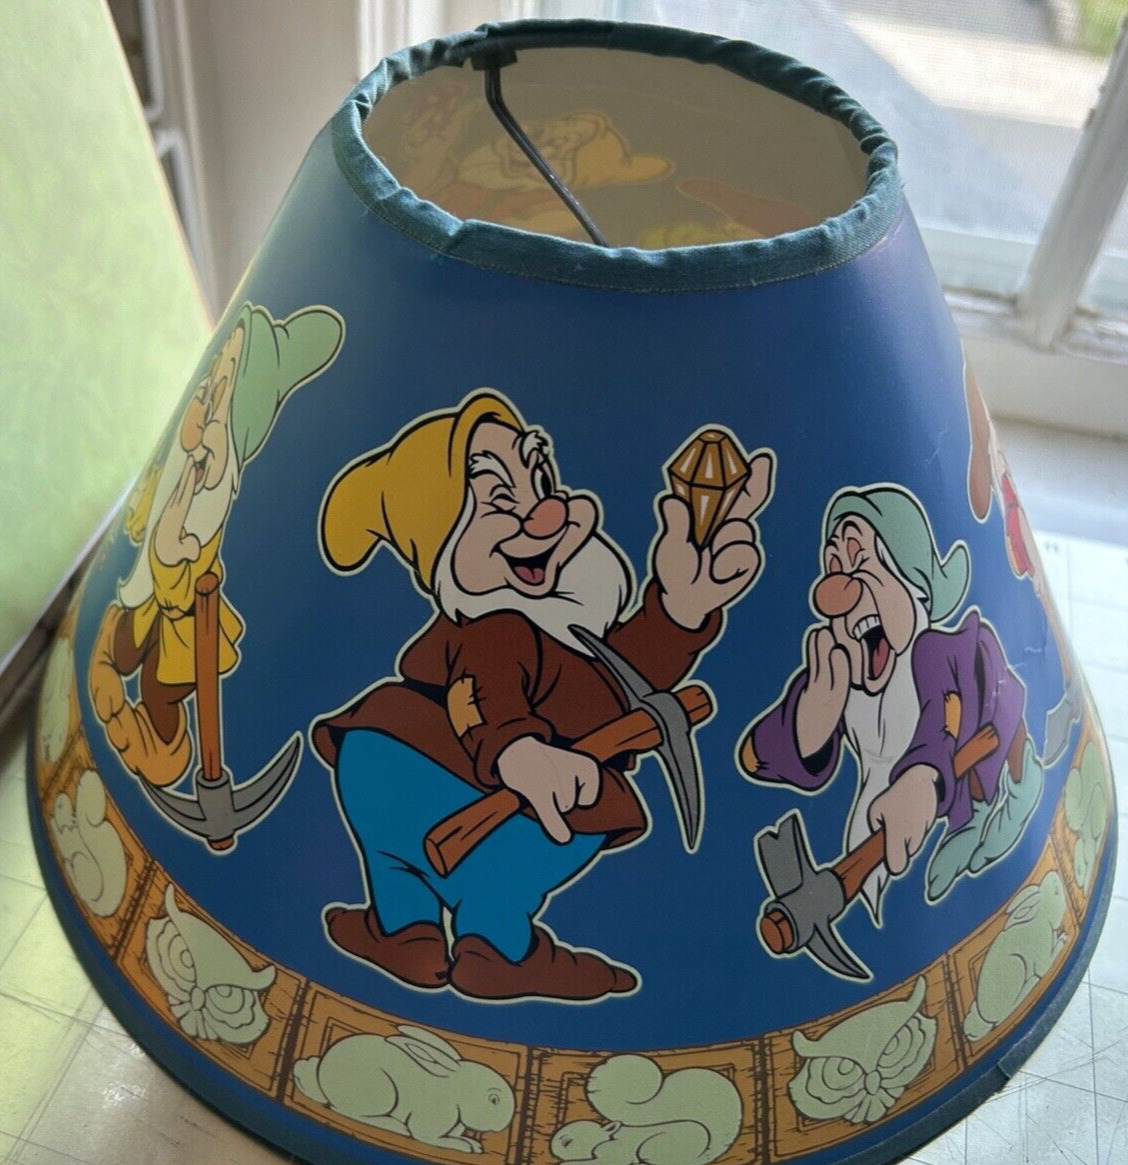 vtg LAMP SHADE Snow White and the 7 Dwarfs disney movie figure lampshade retro